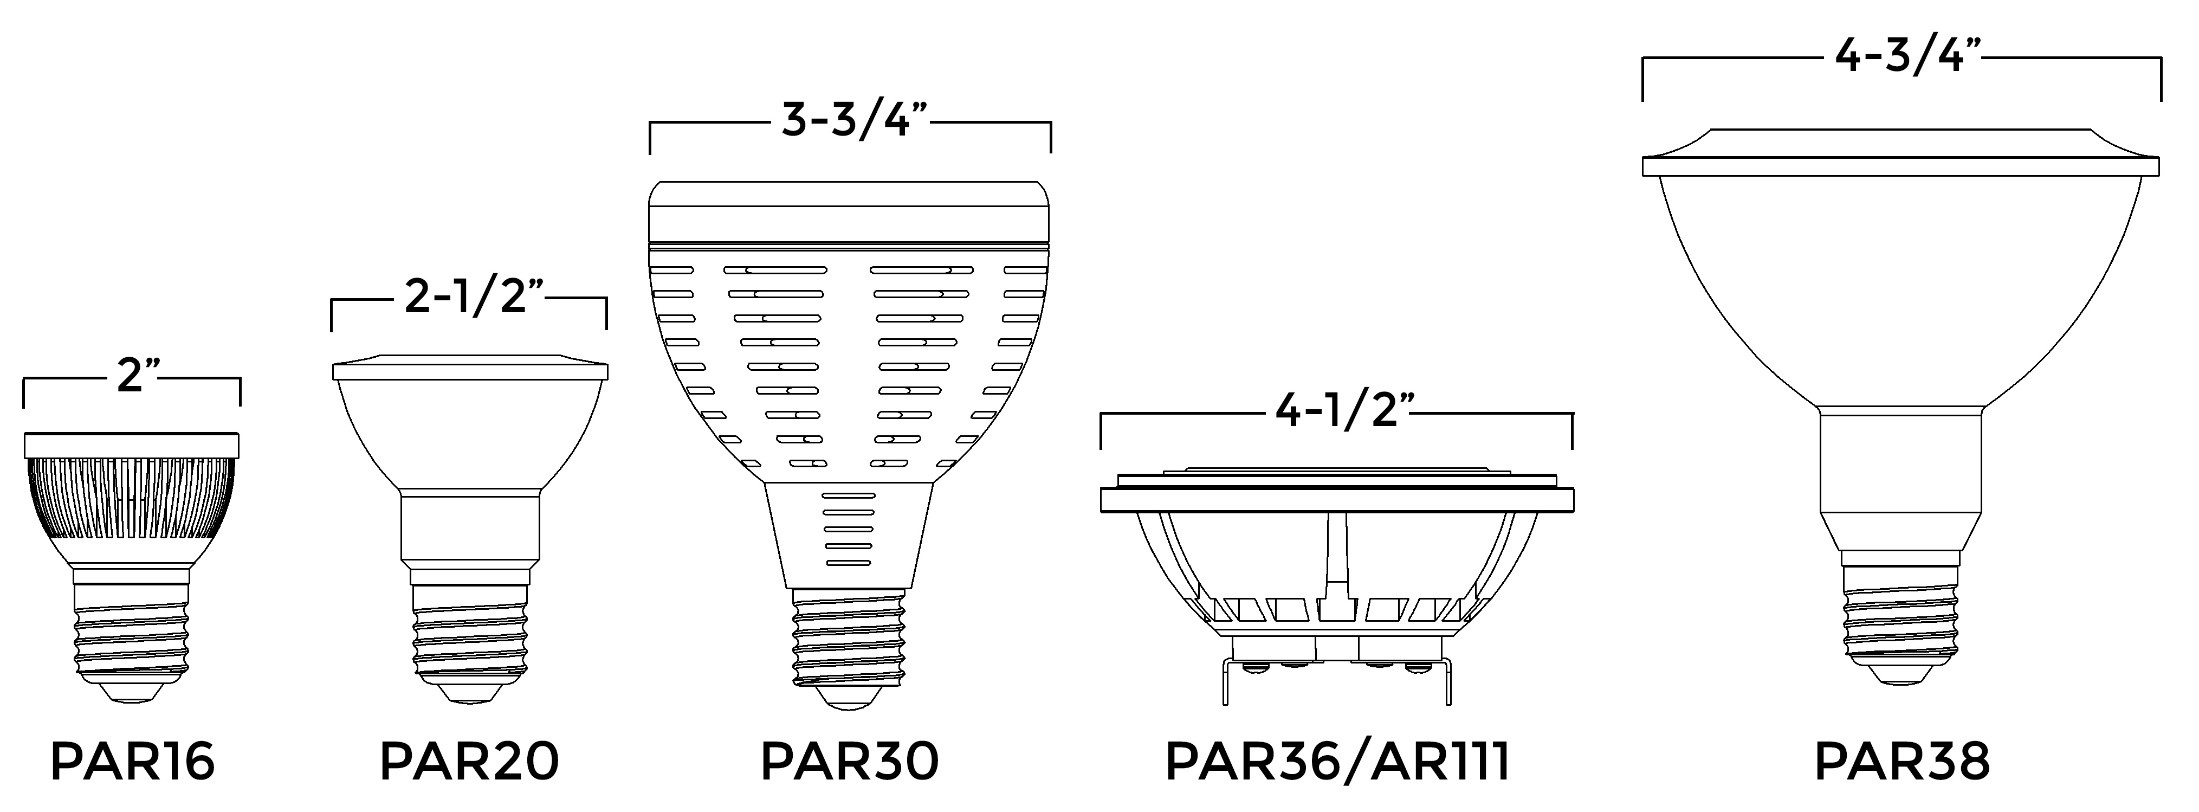 LED PAR30 Bulb Base Types Chart